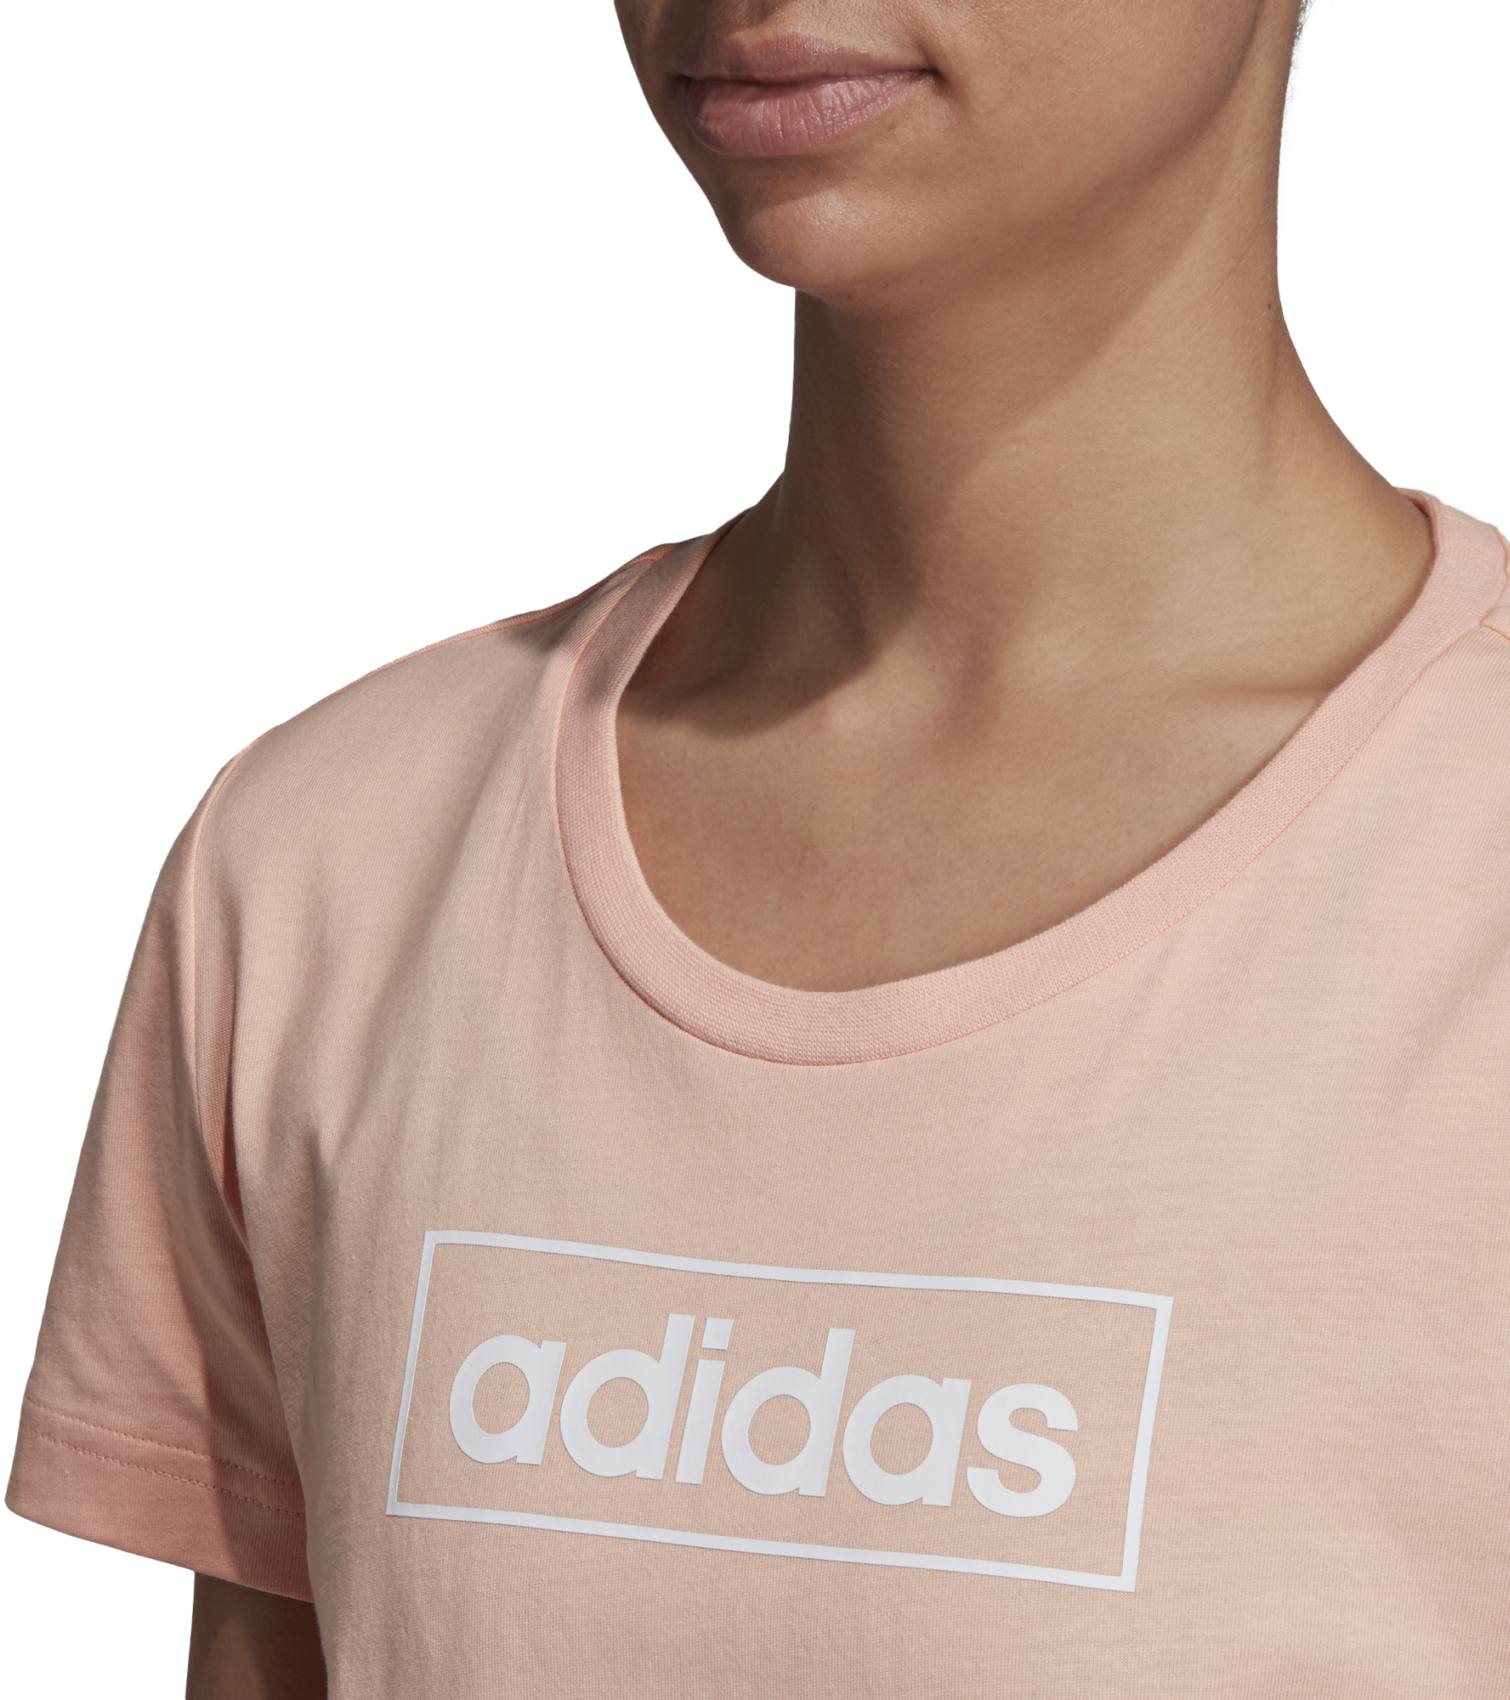 Women’s T-shirt